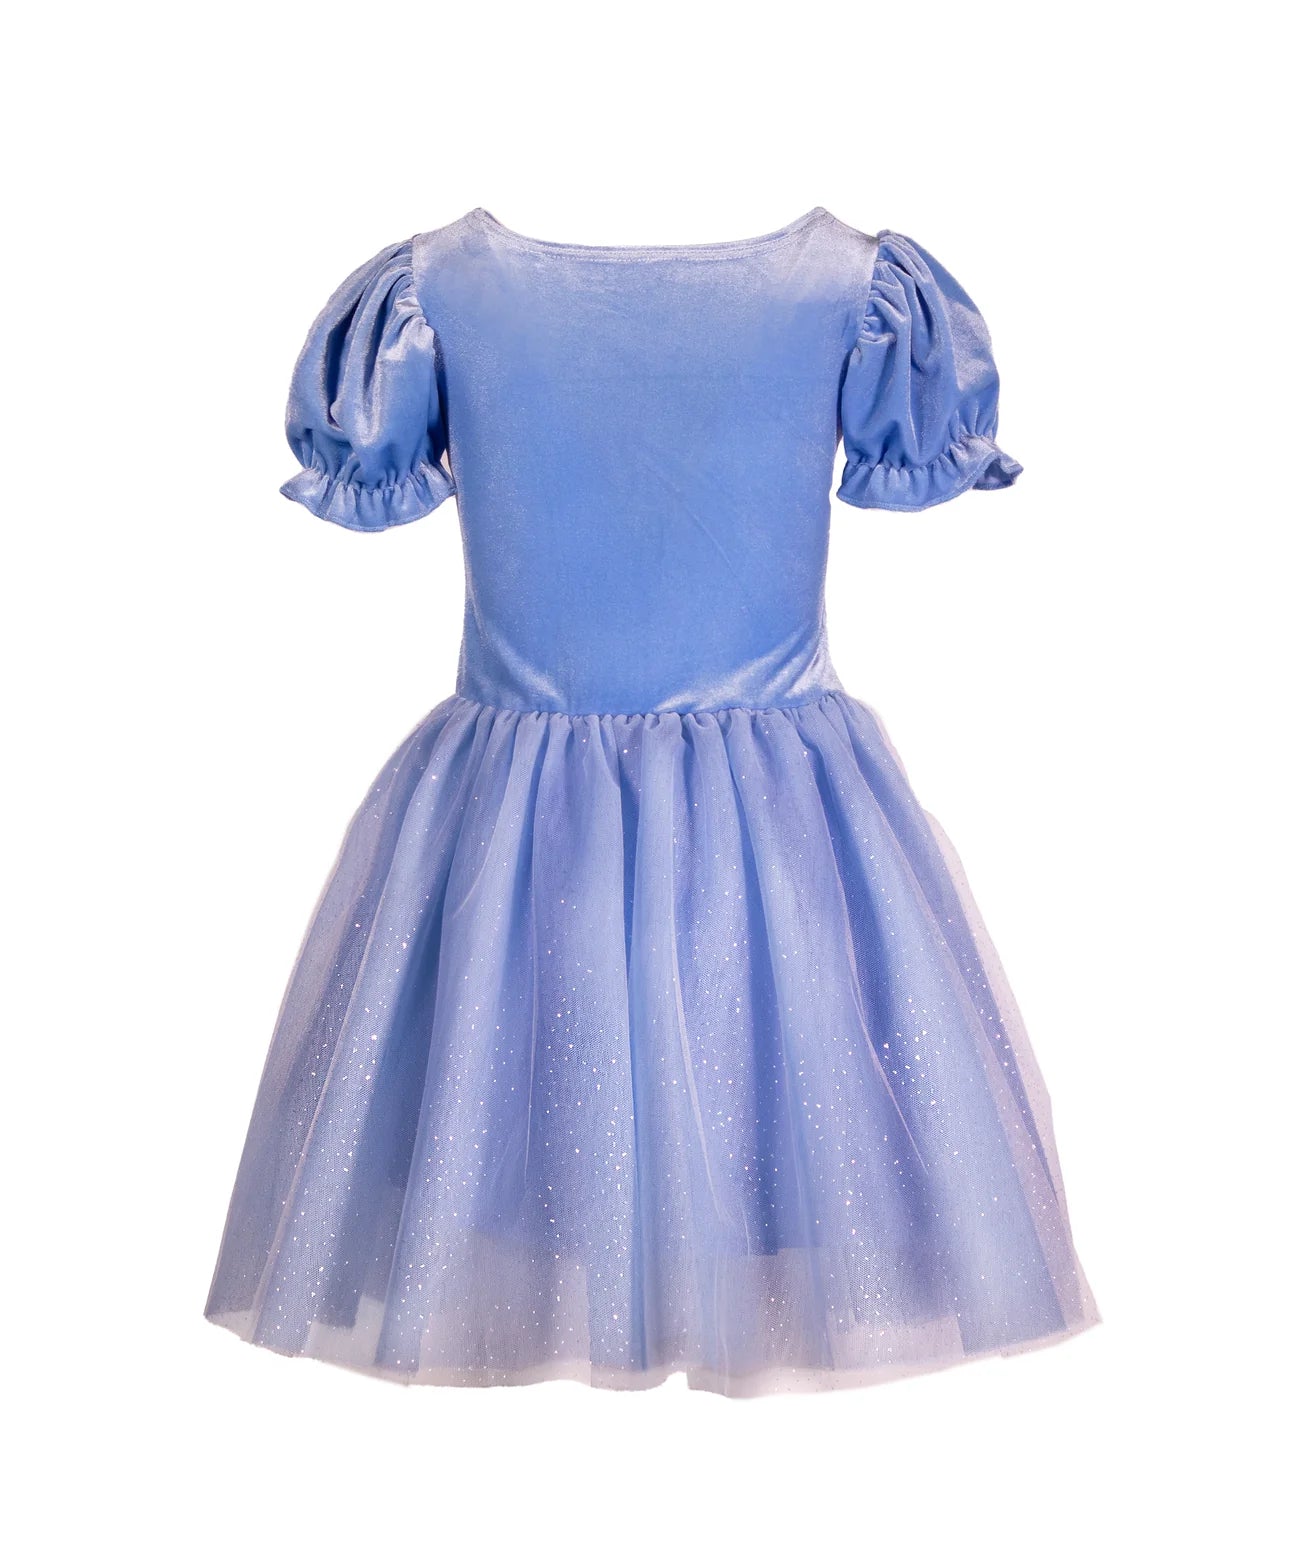 PREORDER Joy by Teresita Orillac: The Sofi Dress Light Blue